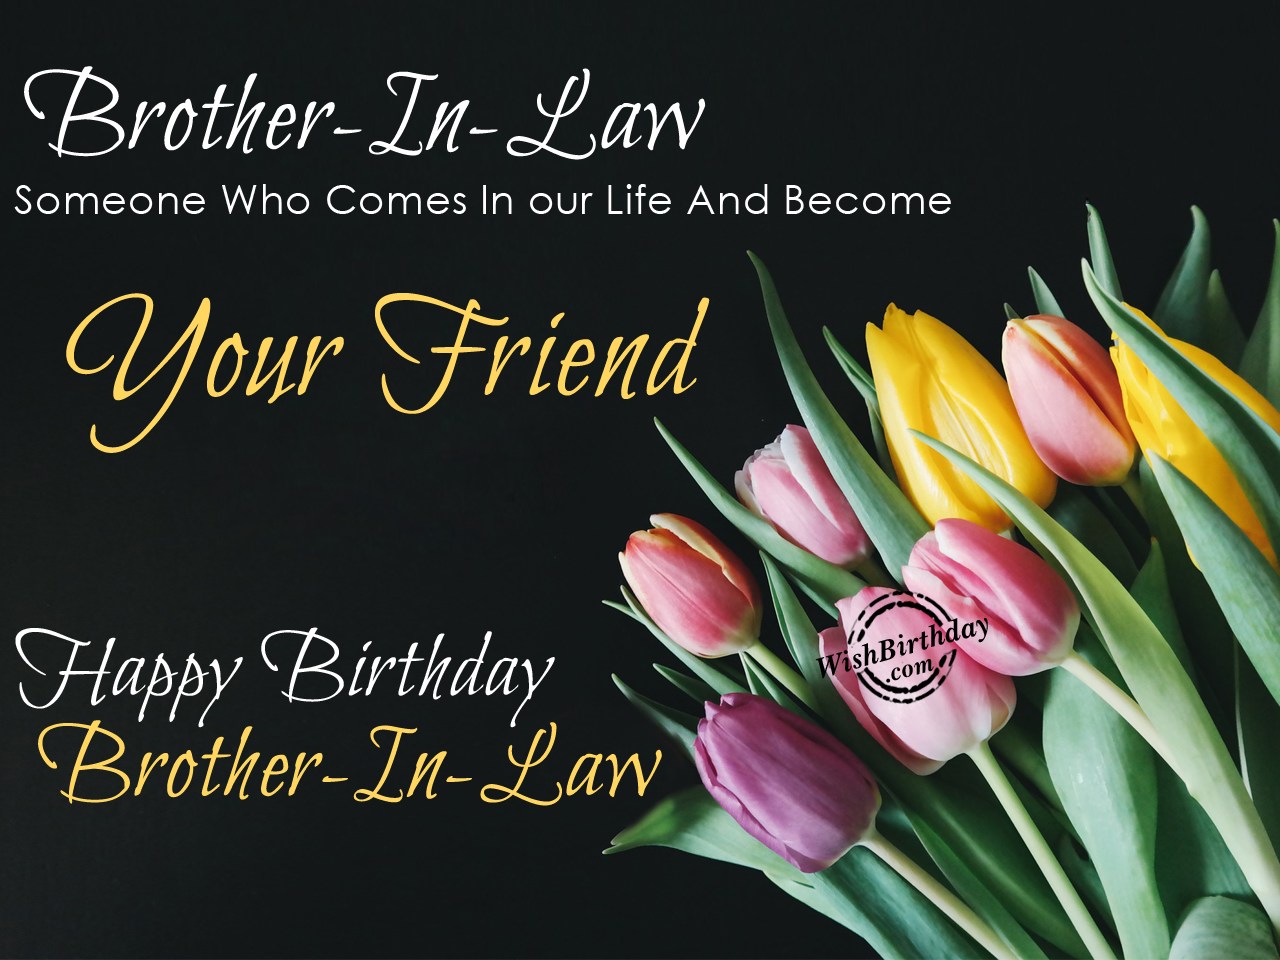 Happy Birthday Brother-In-Law - Birthday Wishes, Happy Birthday ...